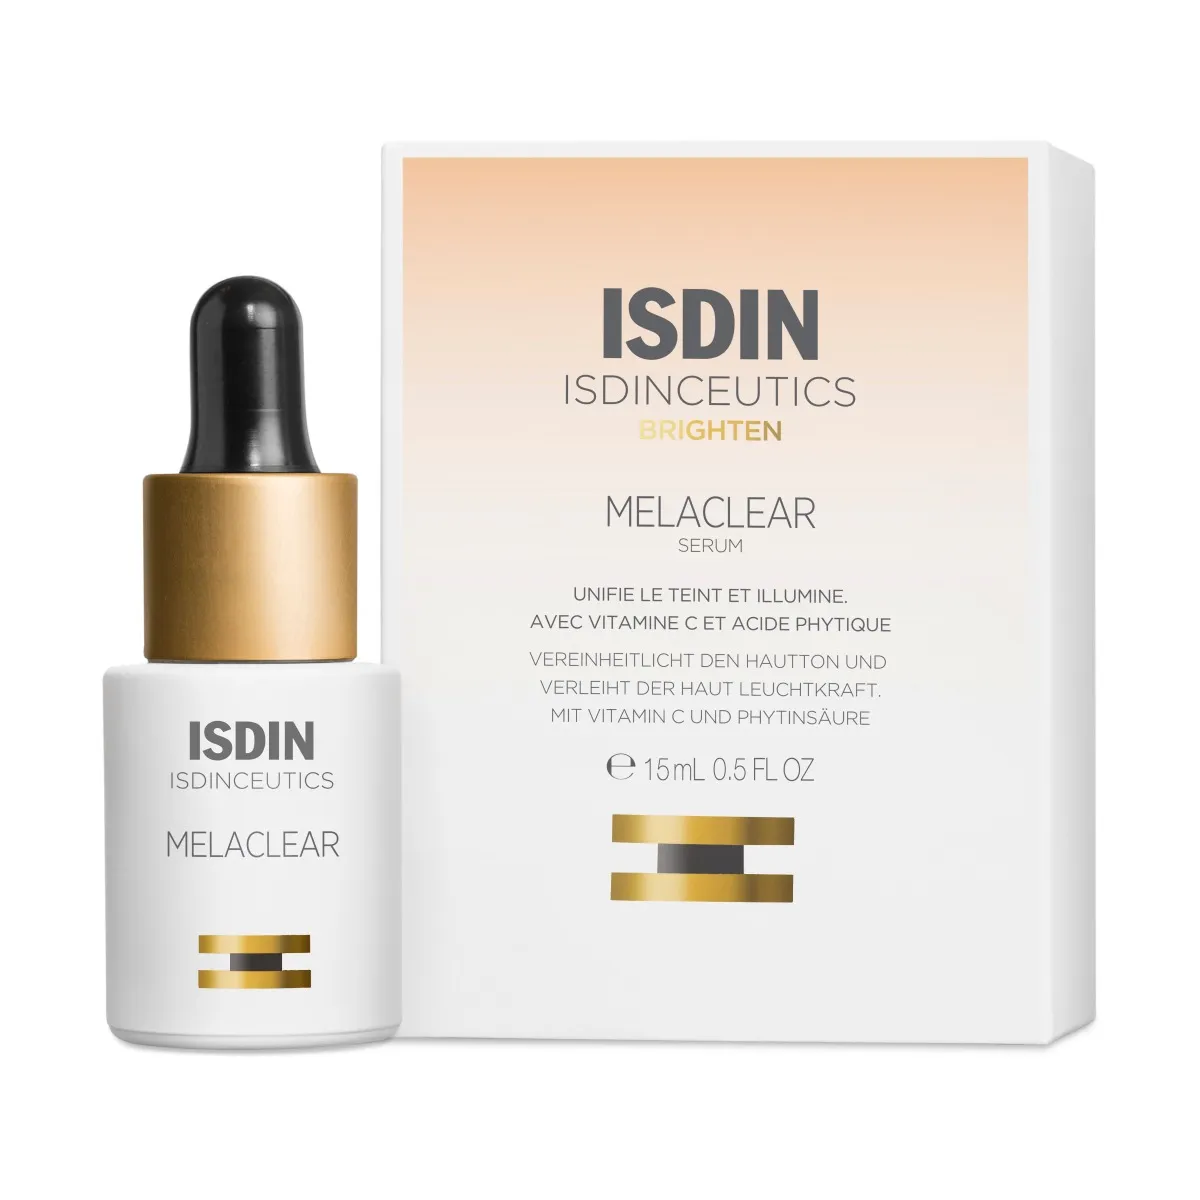 isdin isdinceutics melaclear serum 15ml 8429420154728